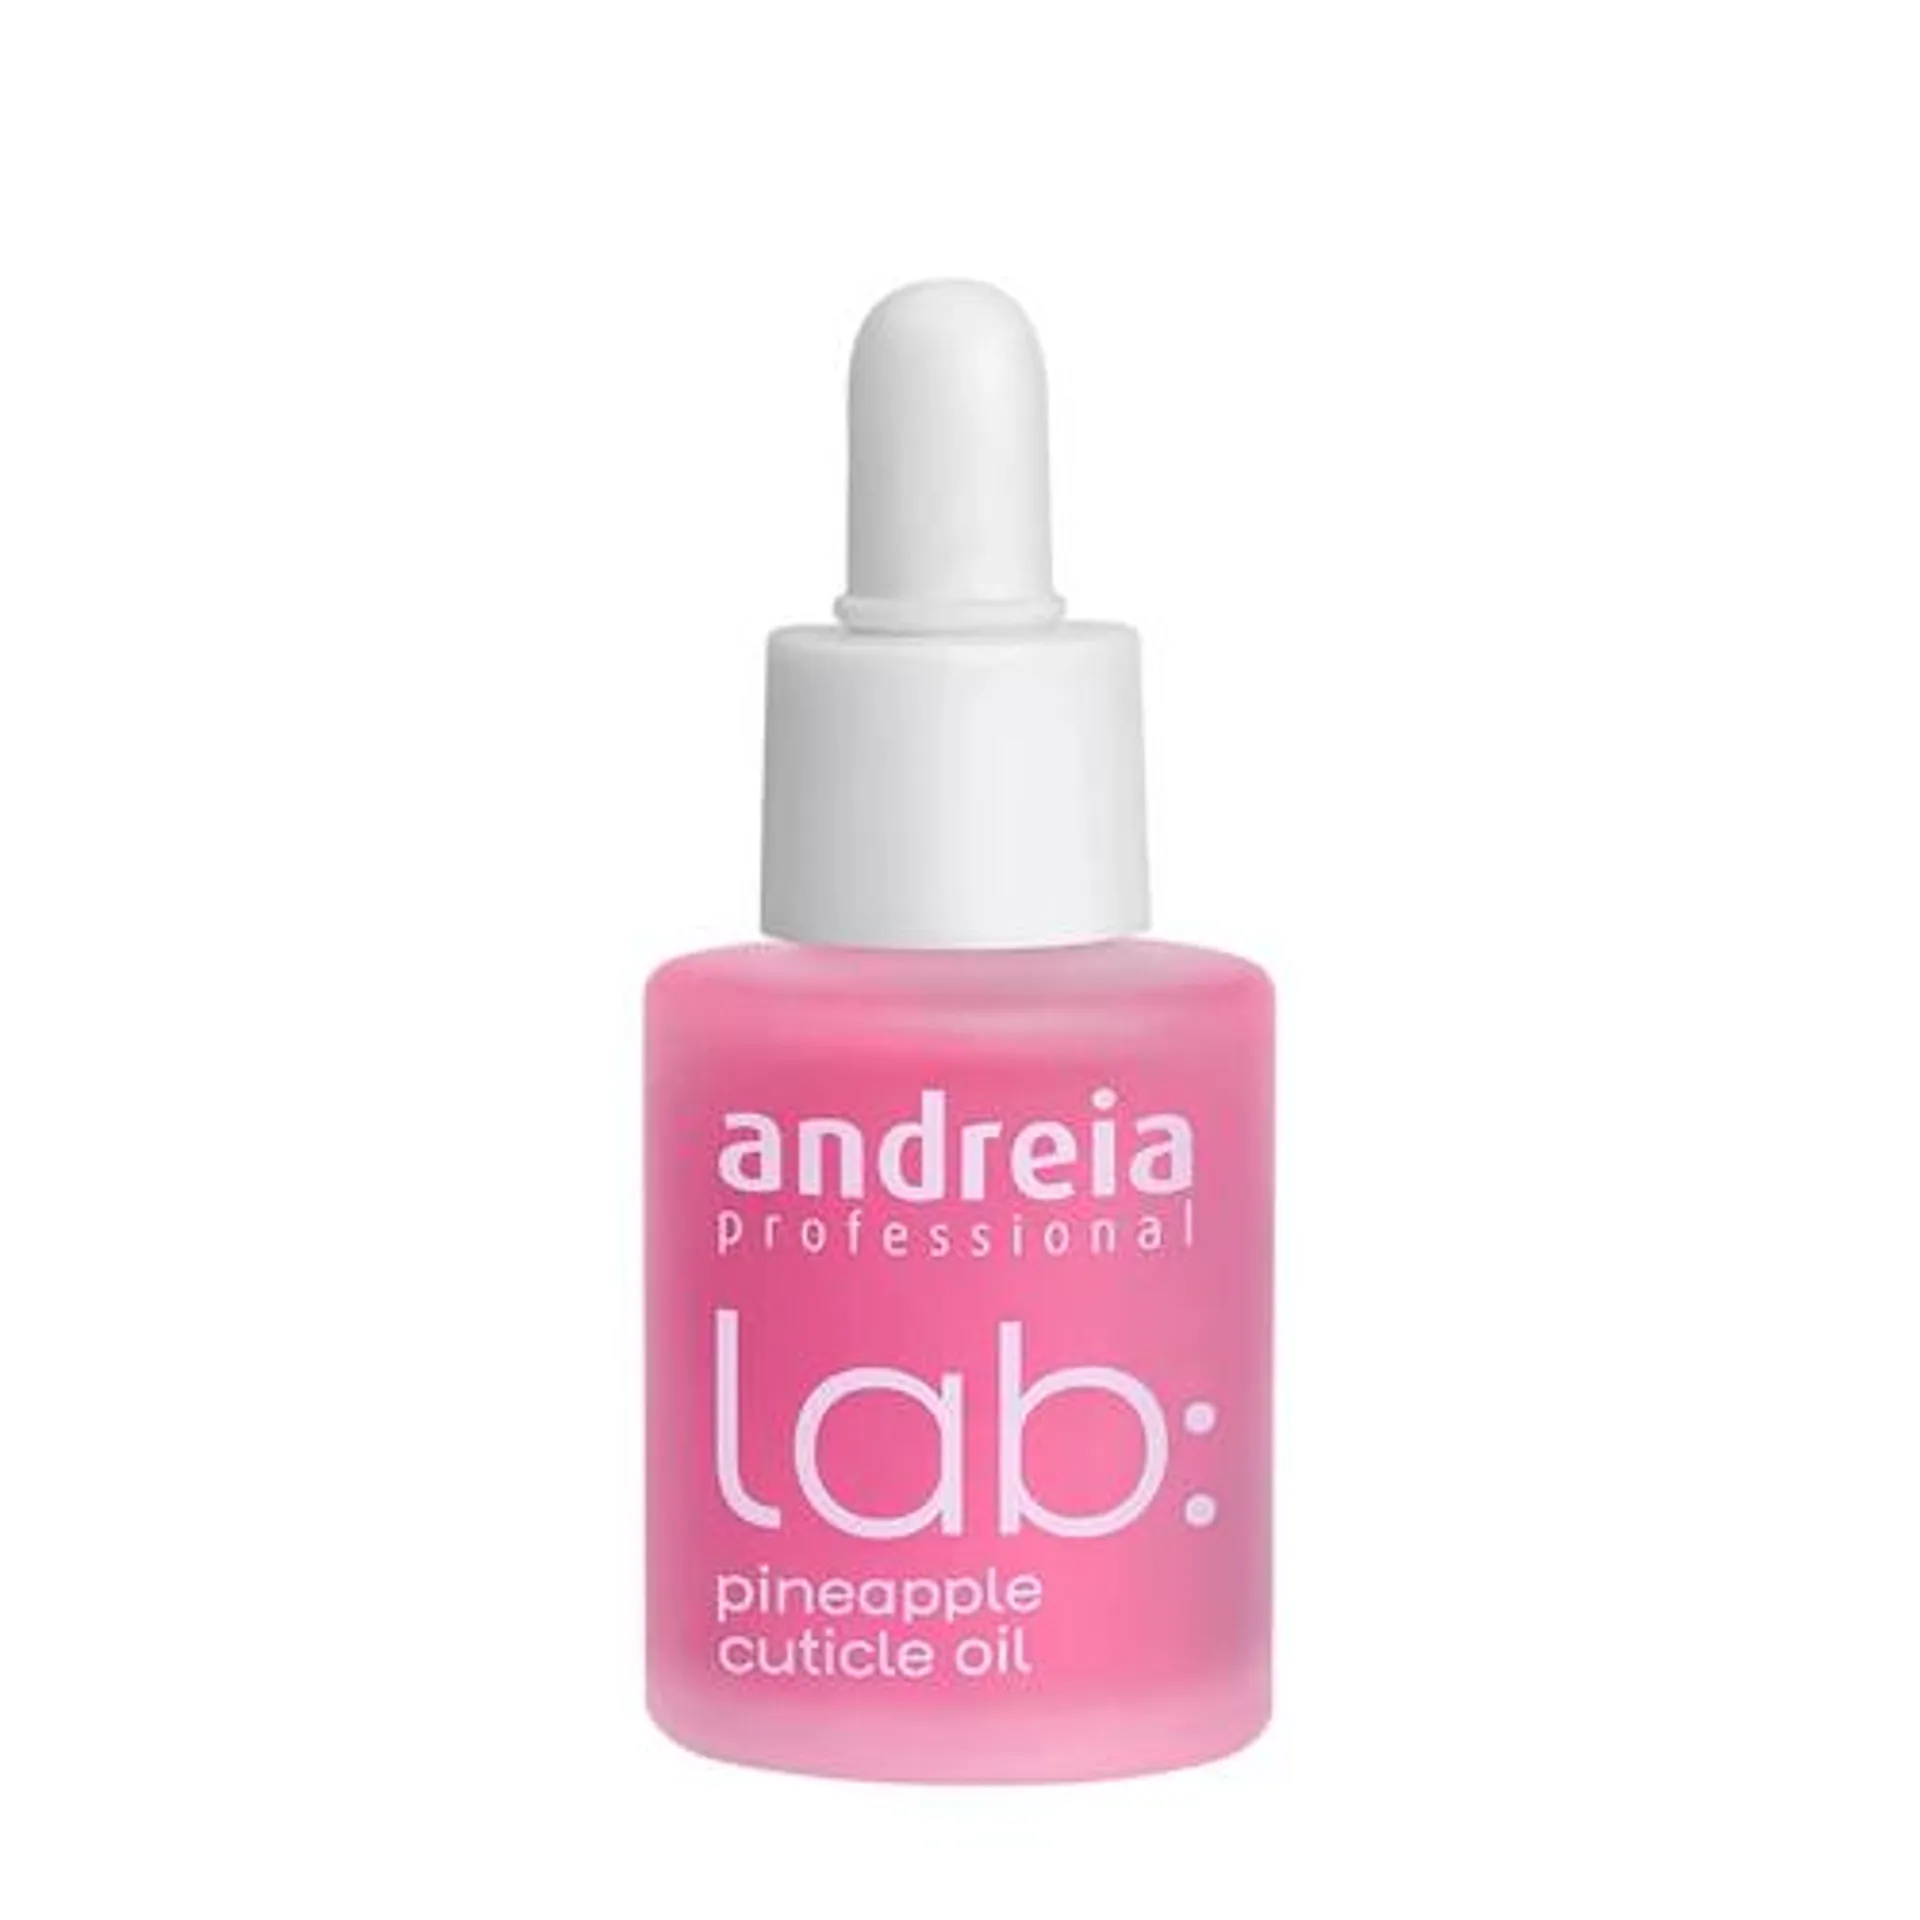 Andreia Lab Pineapple Cuticle Oil